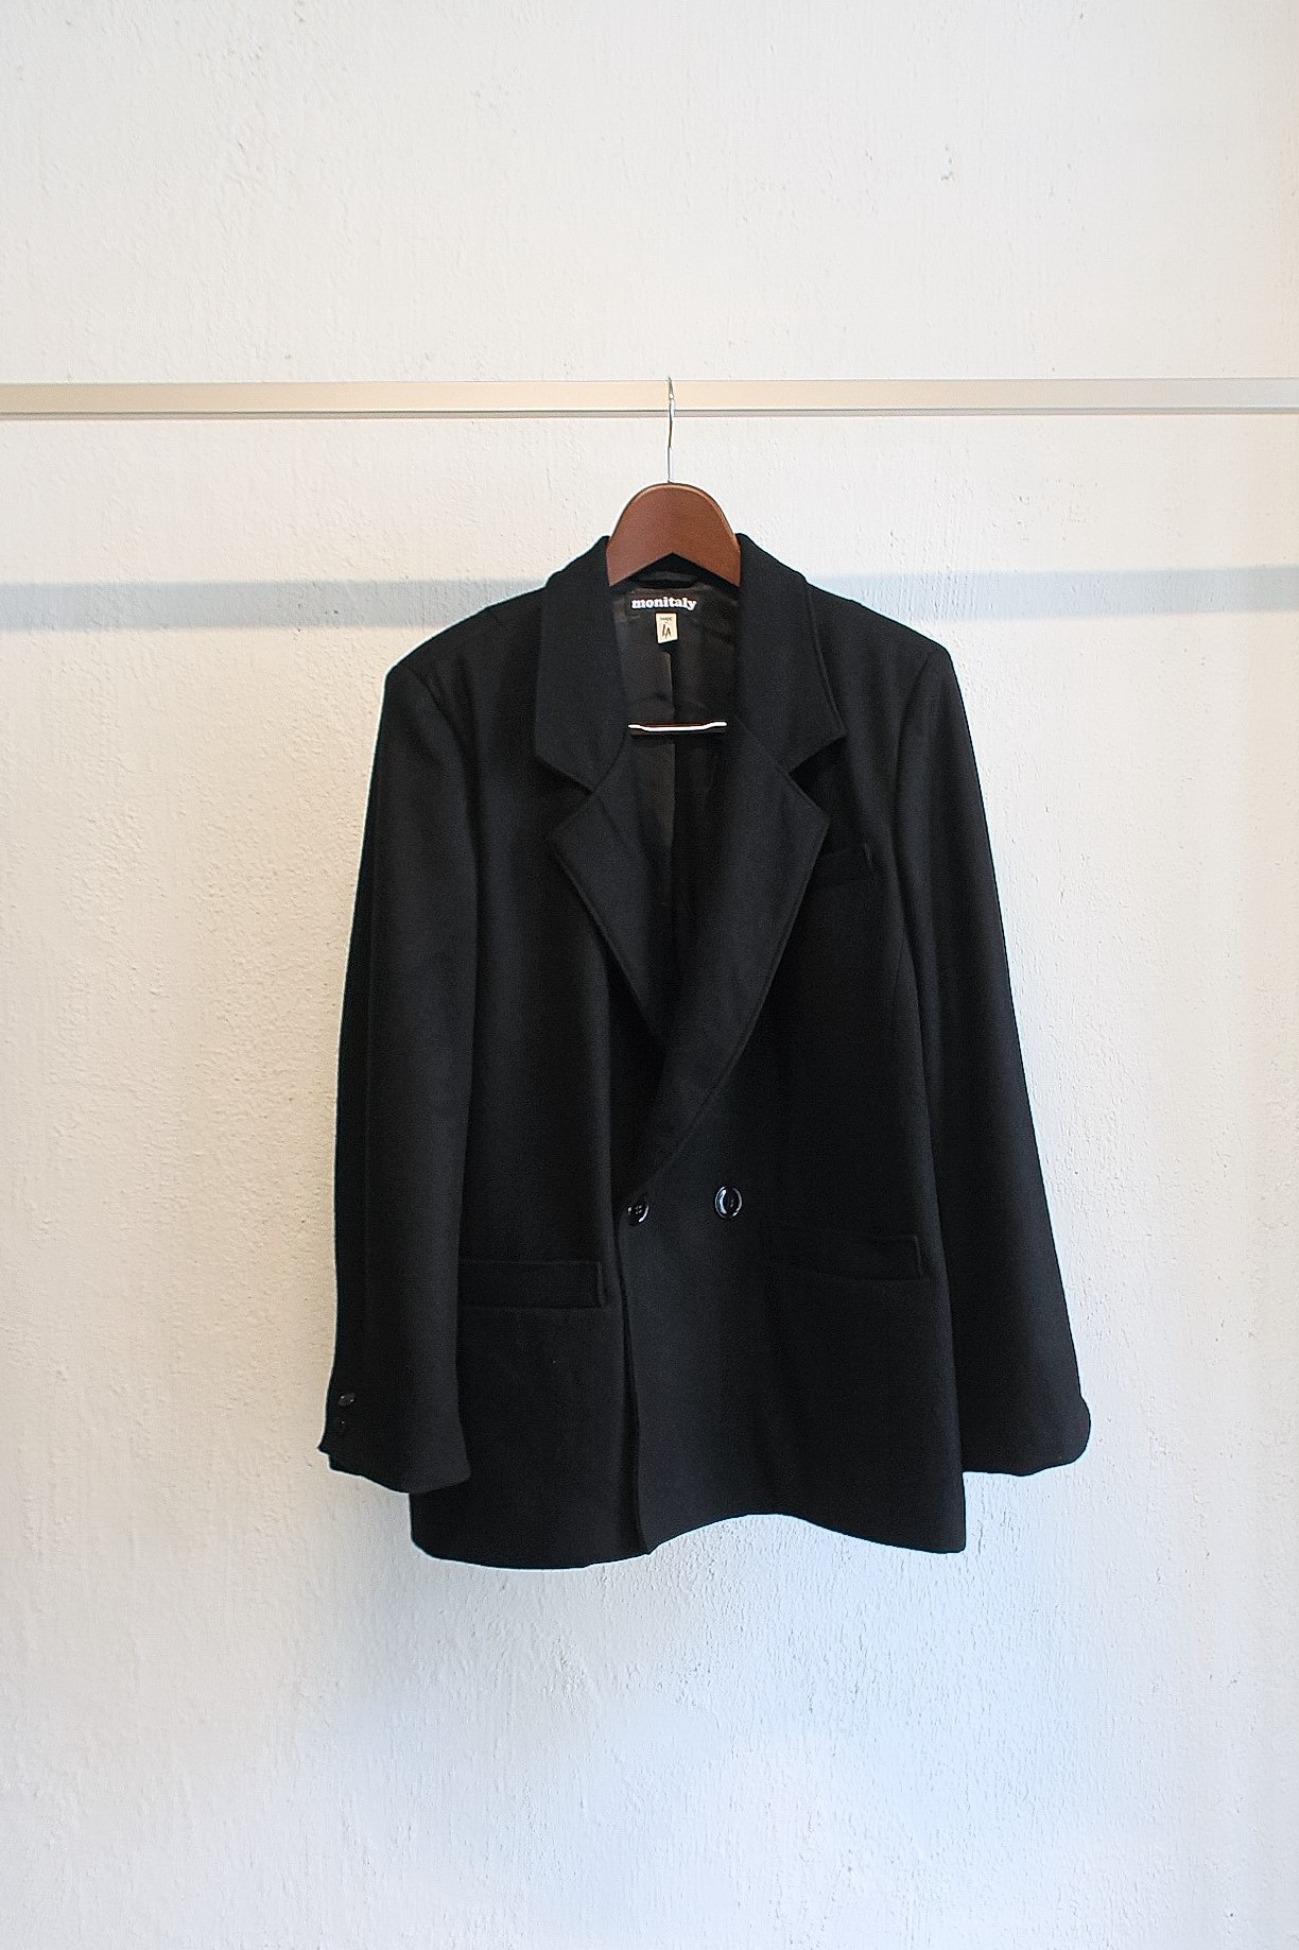 [Monitaly] Mickey Jacket - Wool Flannel Solid Black